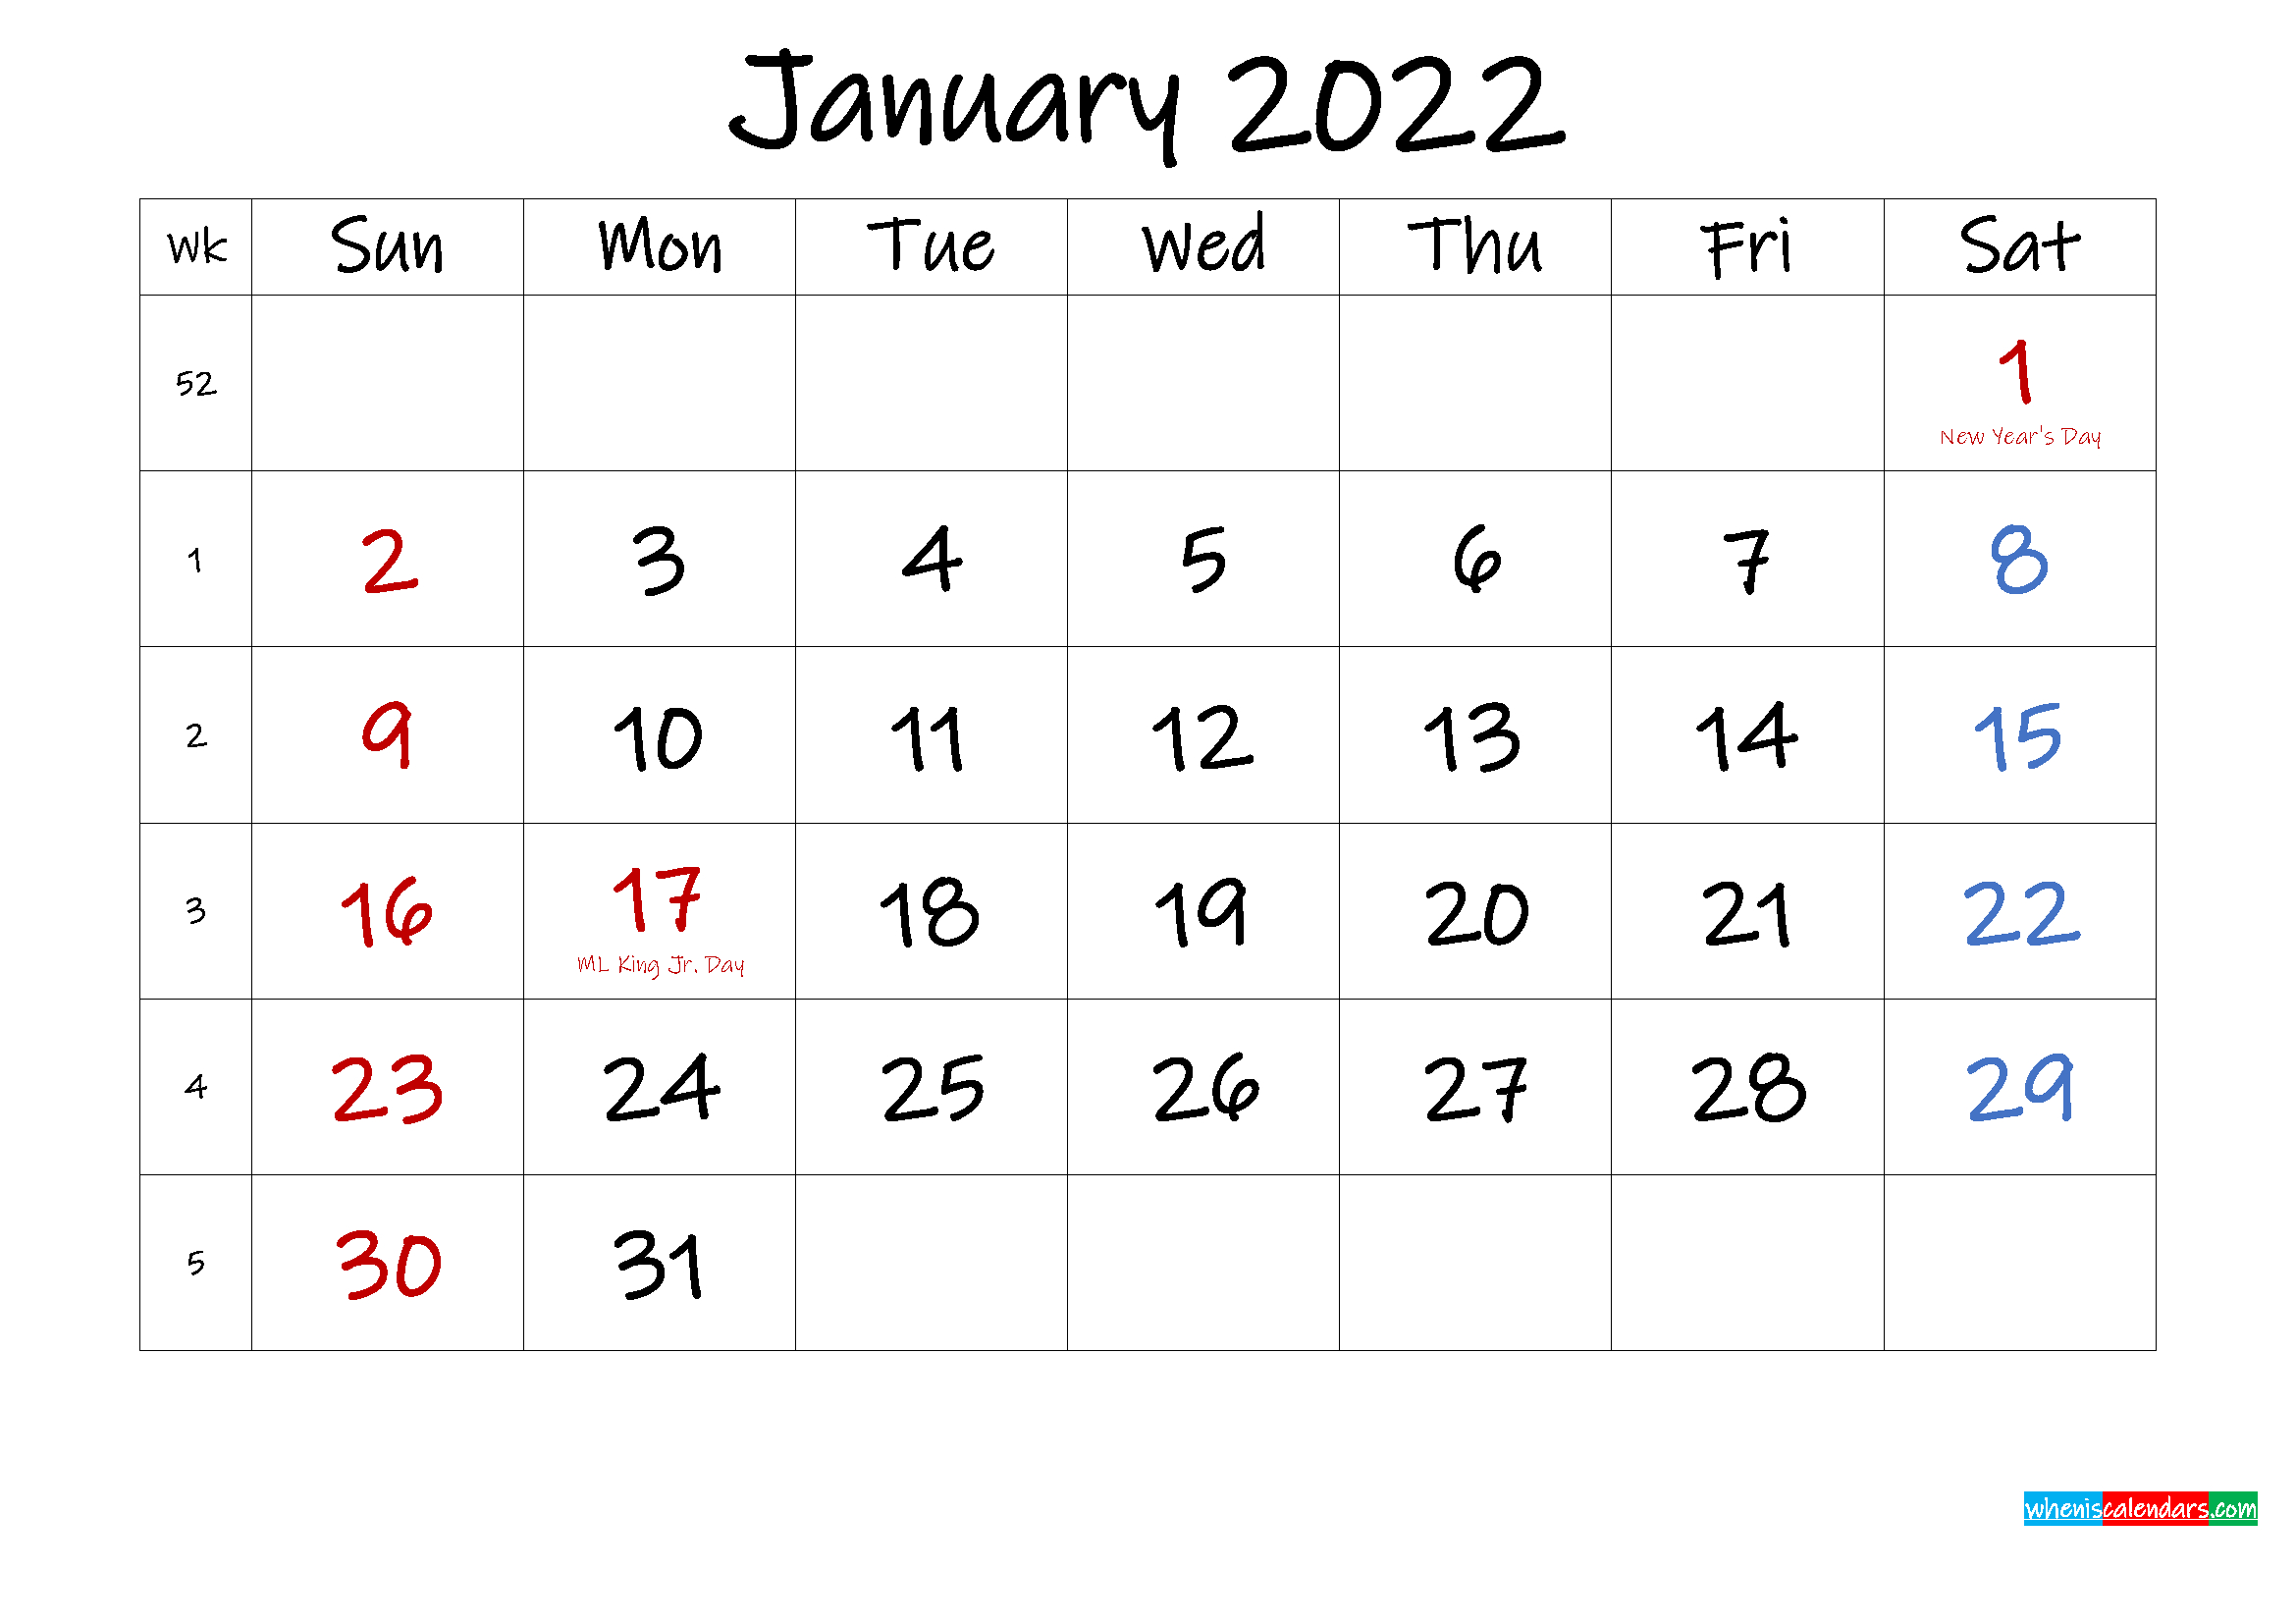 Catch January 2022 Calendar Printable